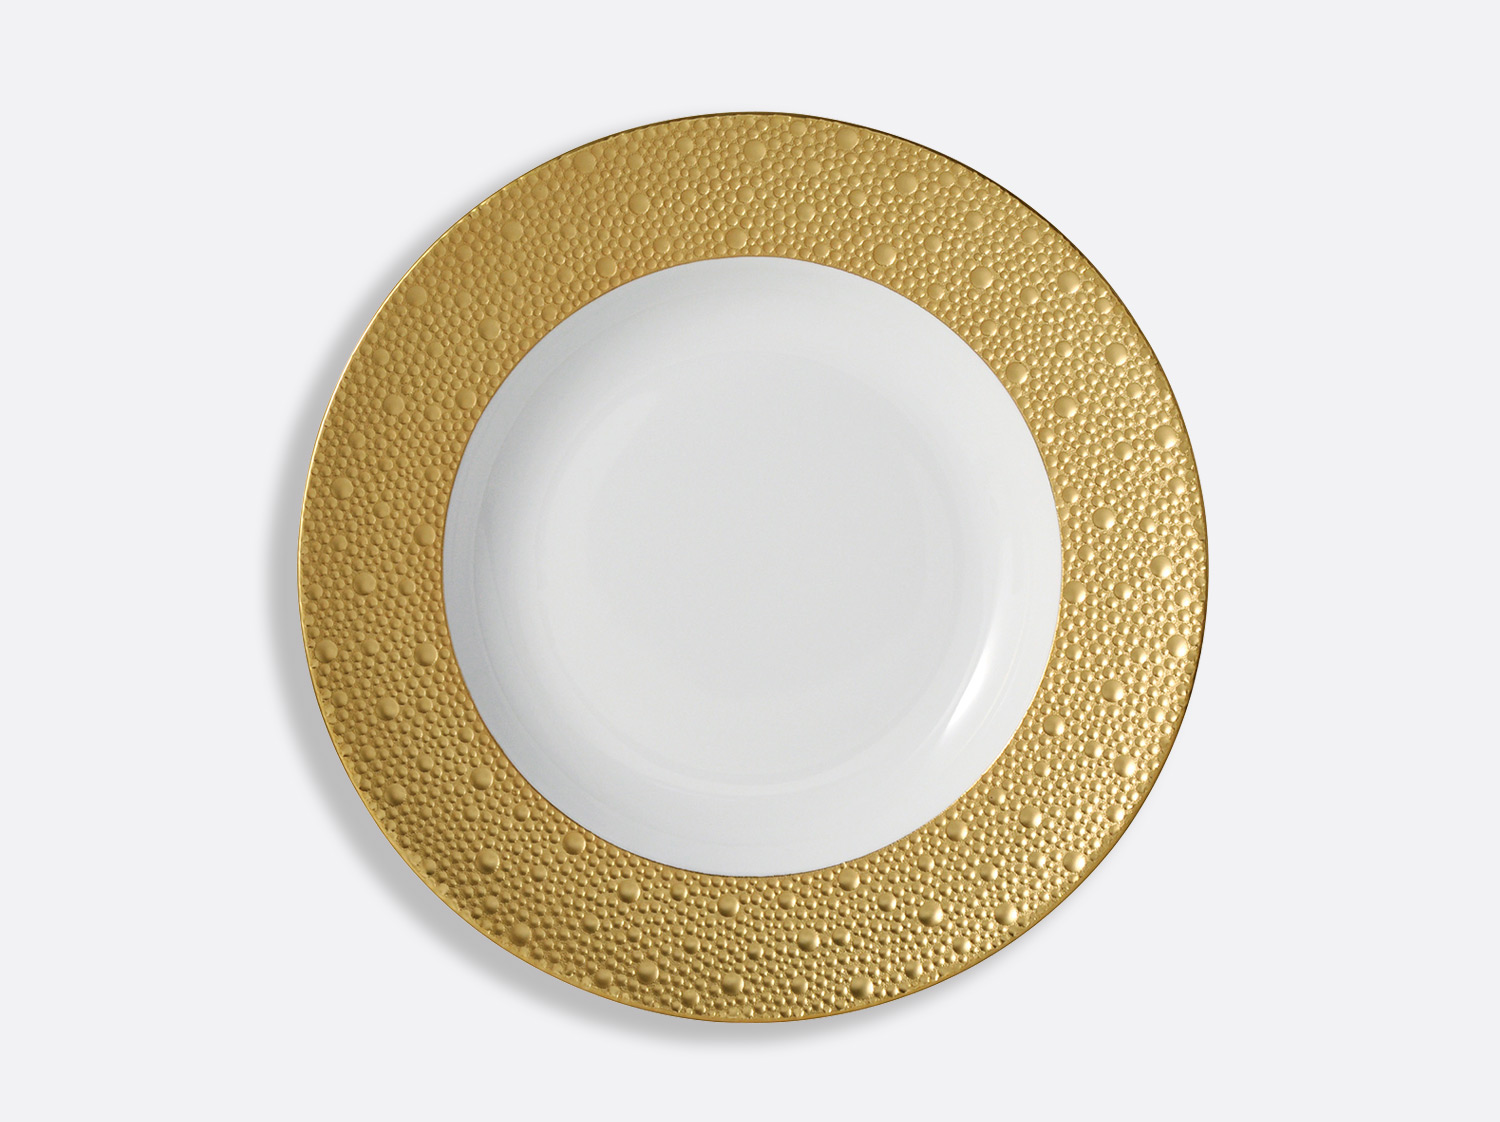 China Rim soup plate 9" of the collection Ecume gold | Bernardaud